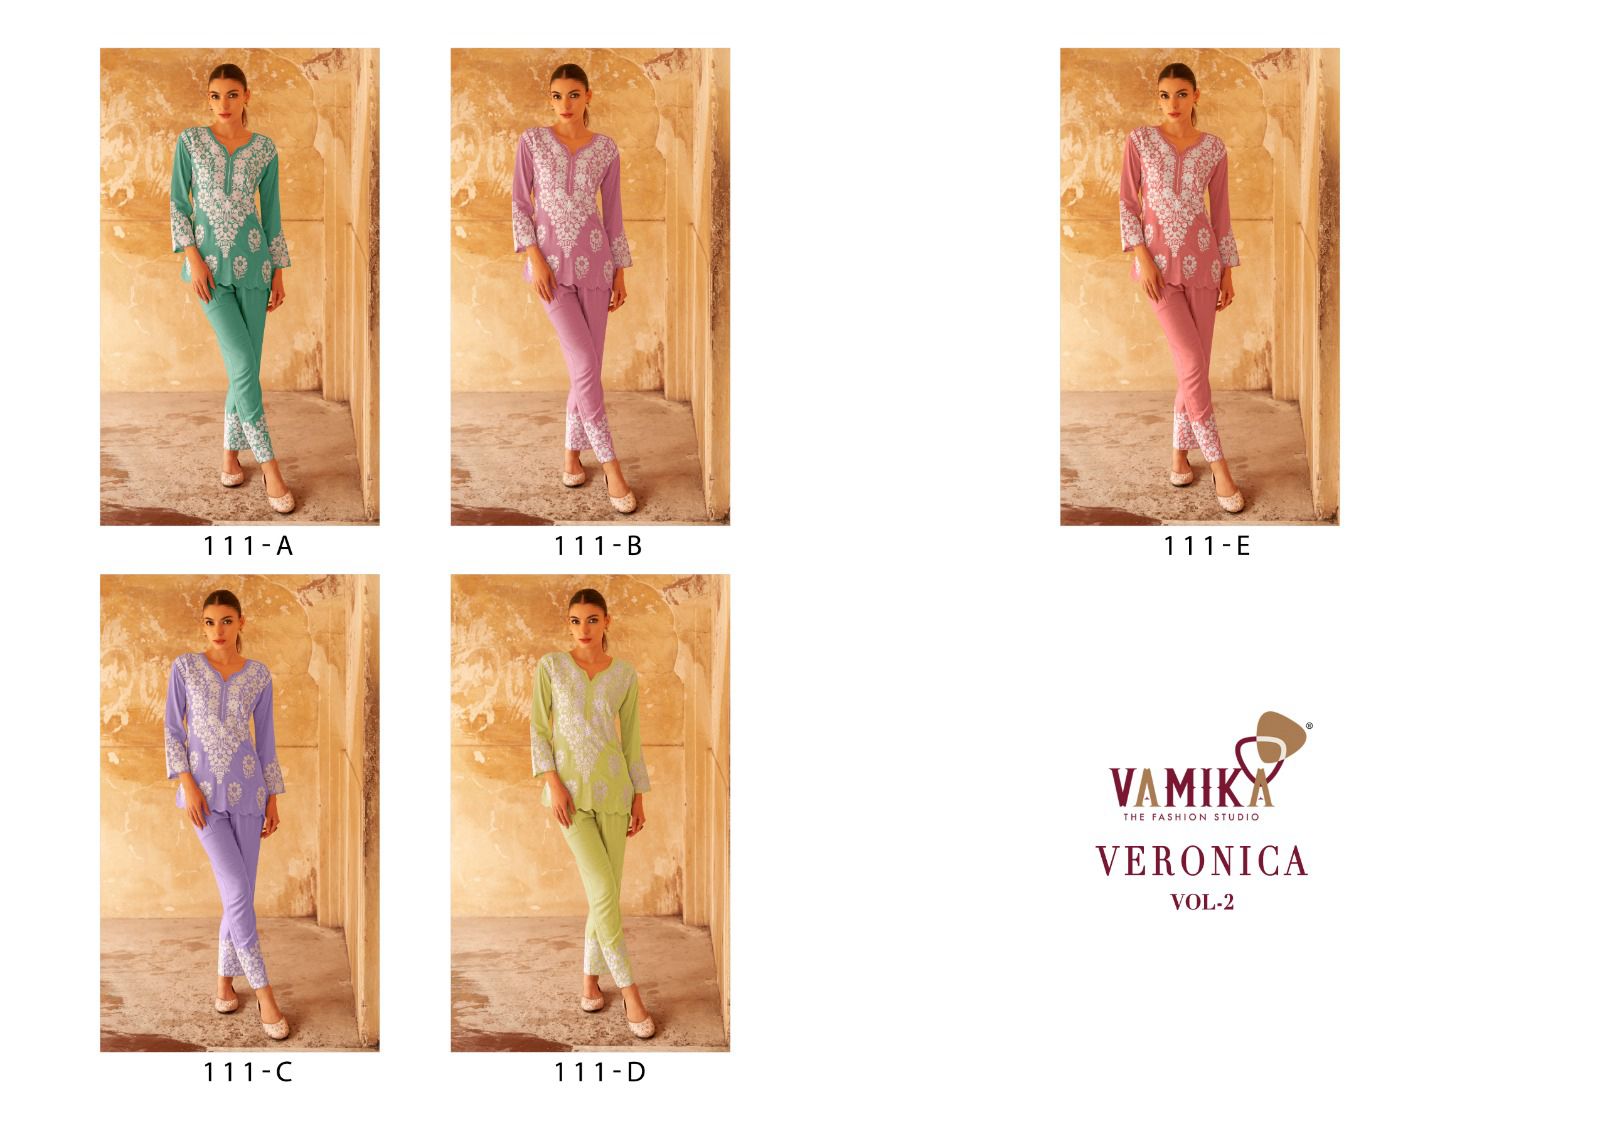 Vamika Veronica Vol 2 collection 3